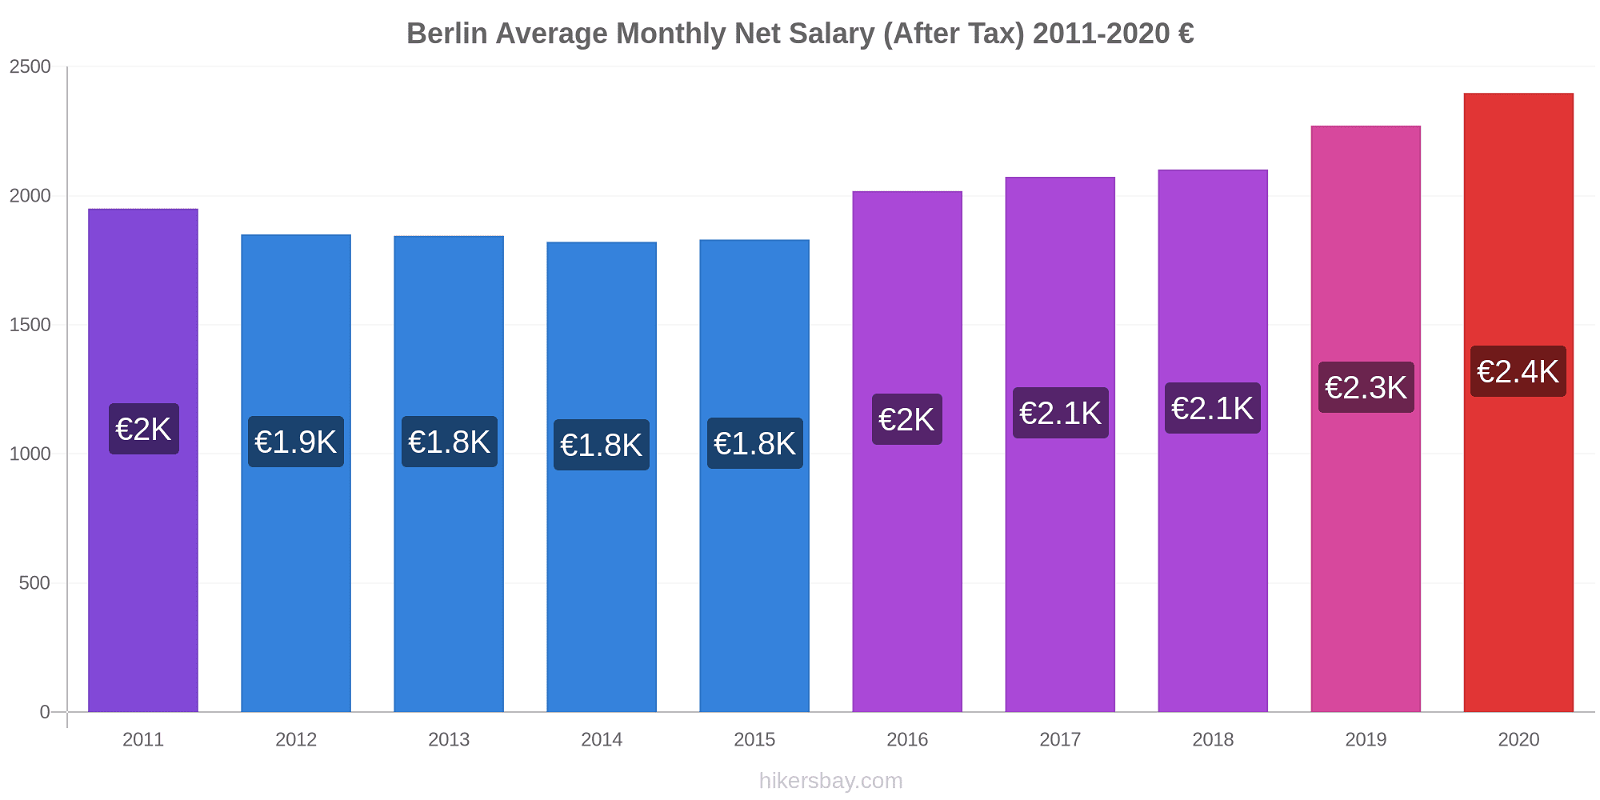 Berlin price changes Average Monthly Net Salary (After Tax) hikersbay.com